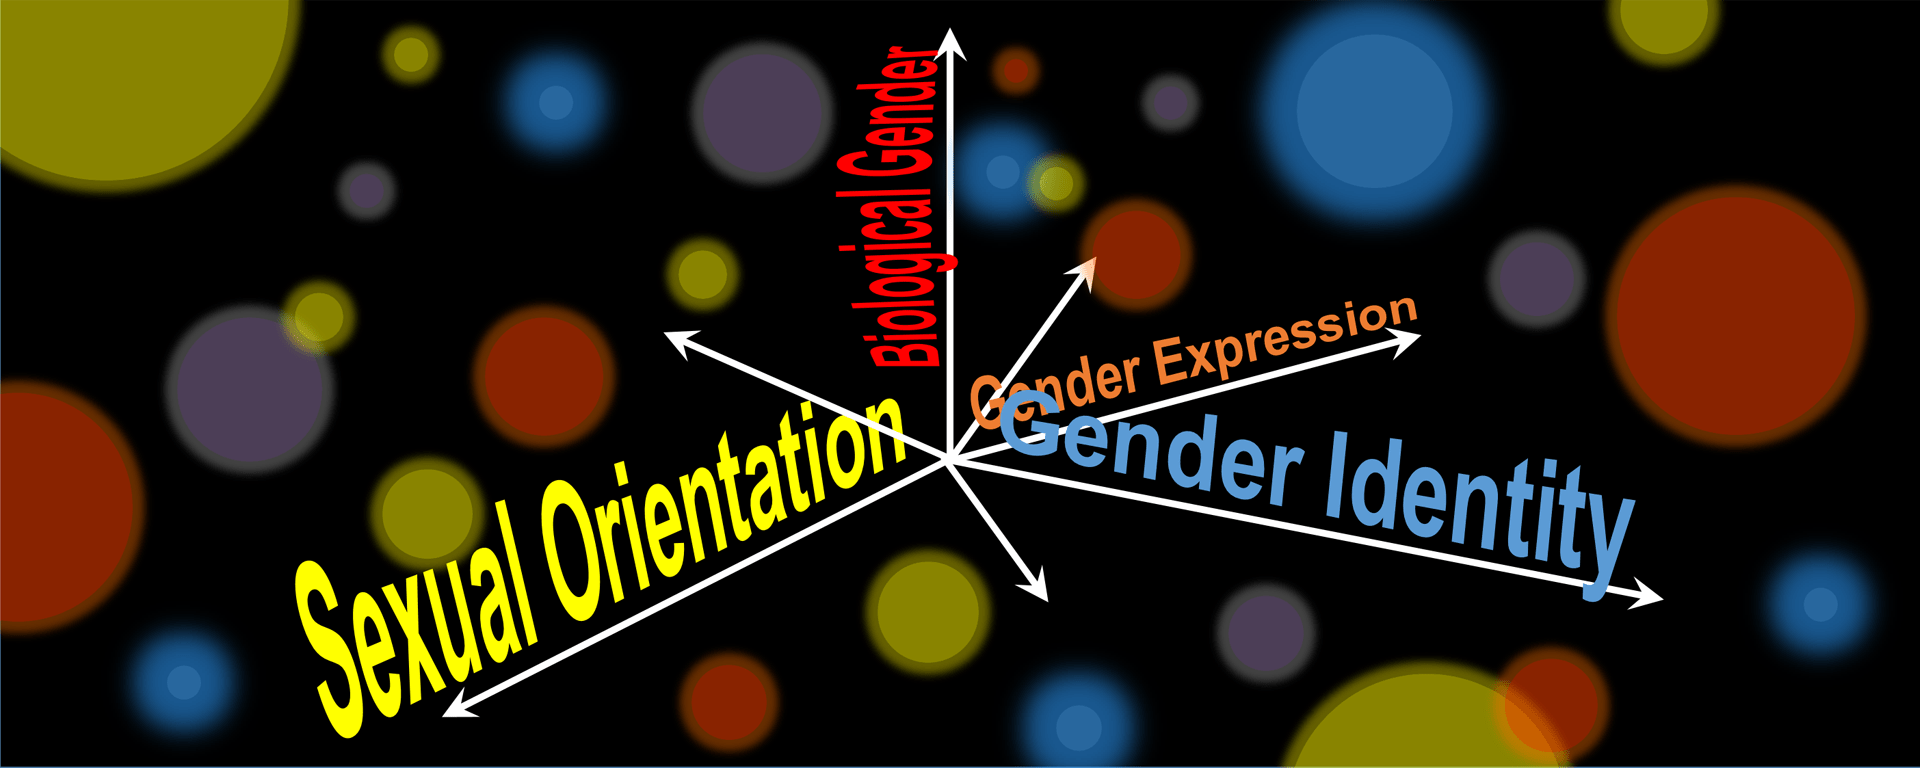 Gender identity disorder transvestite